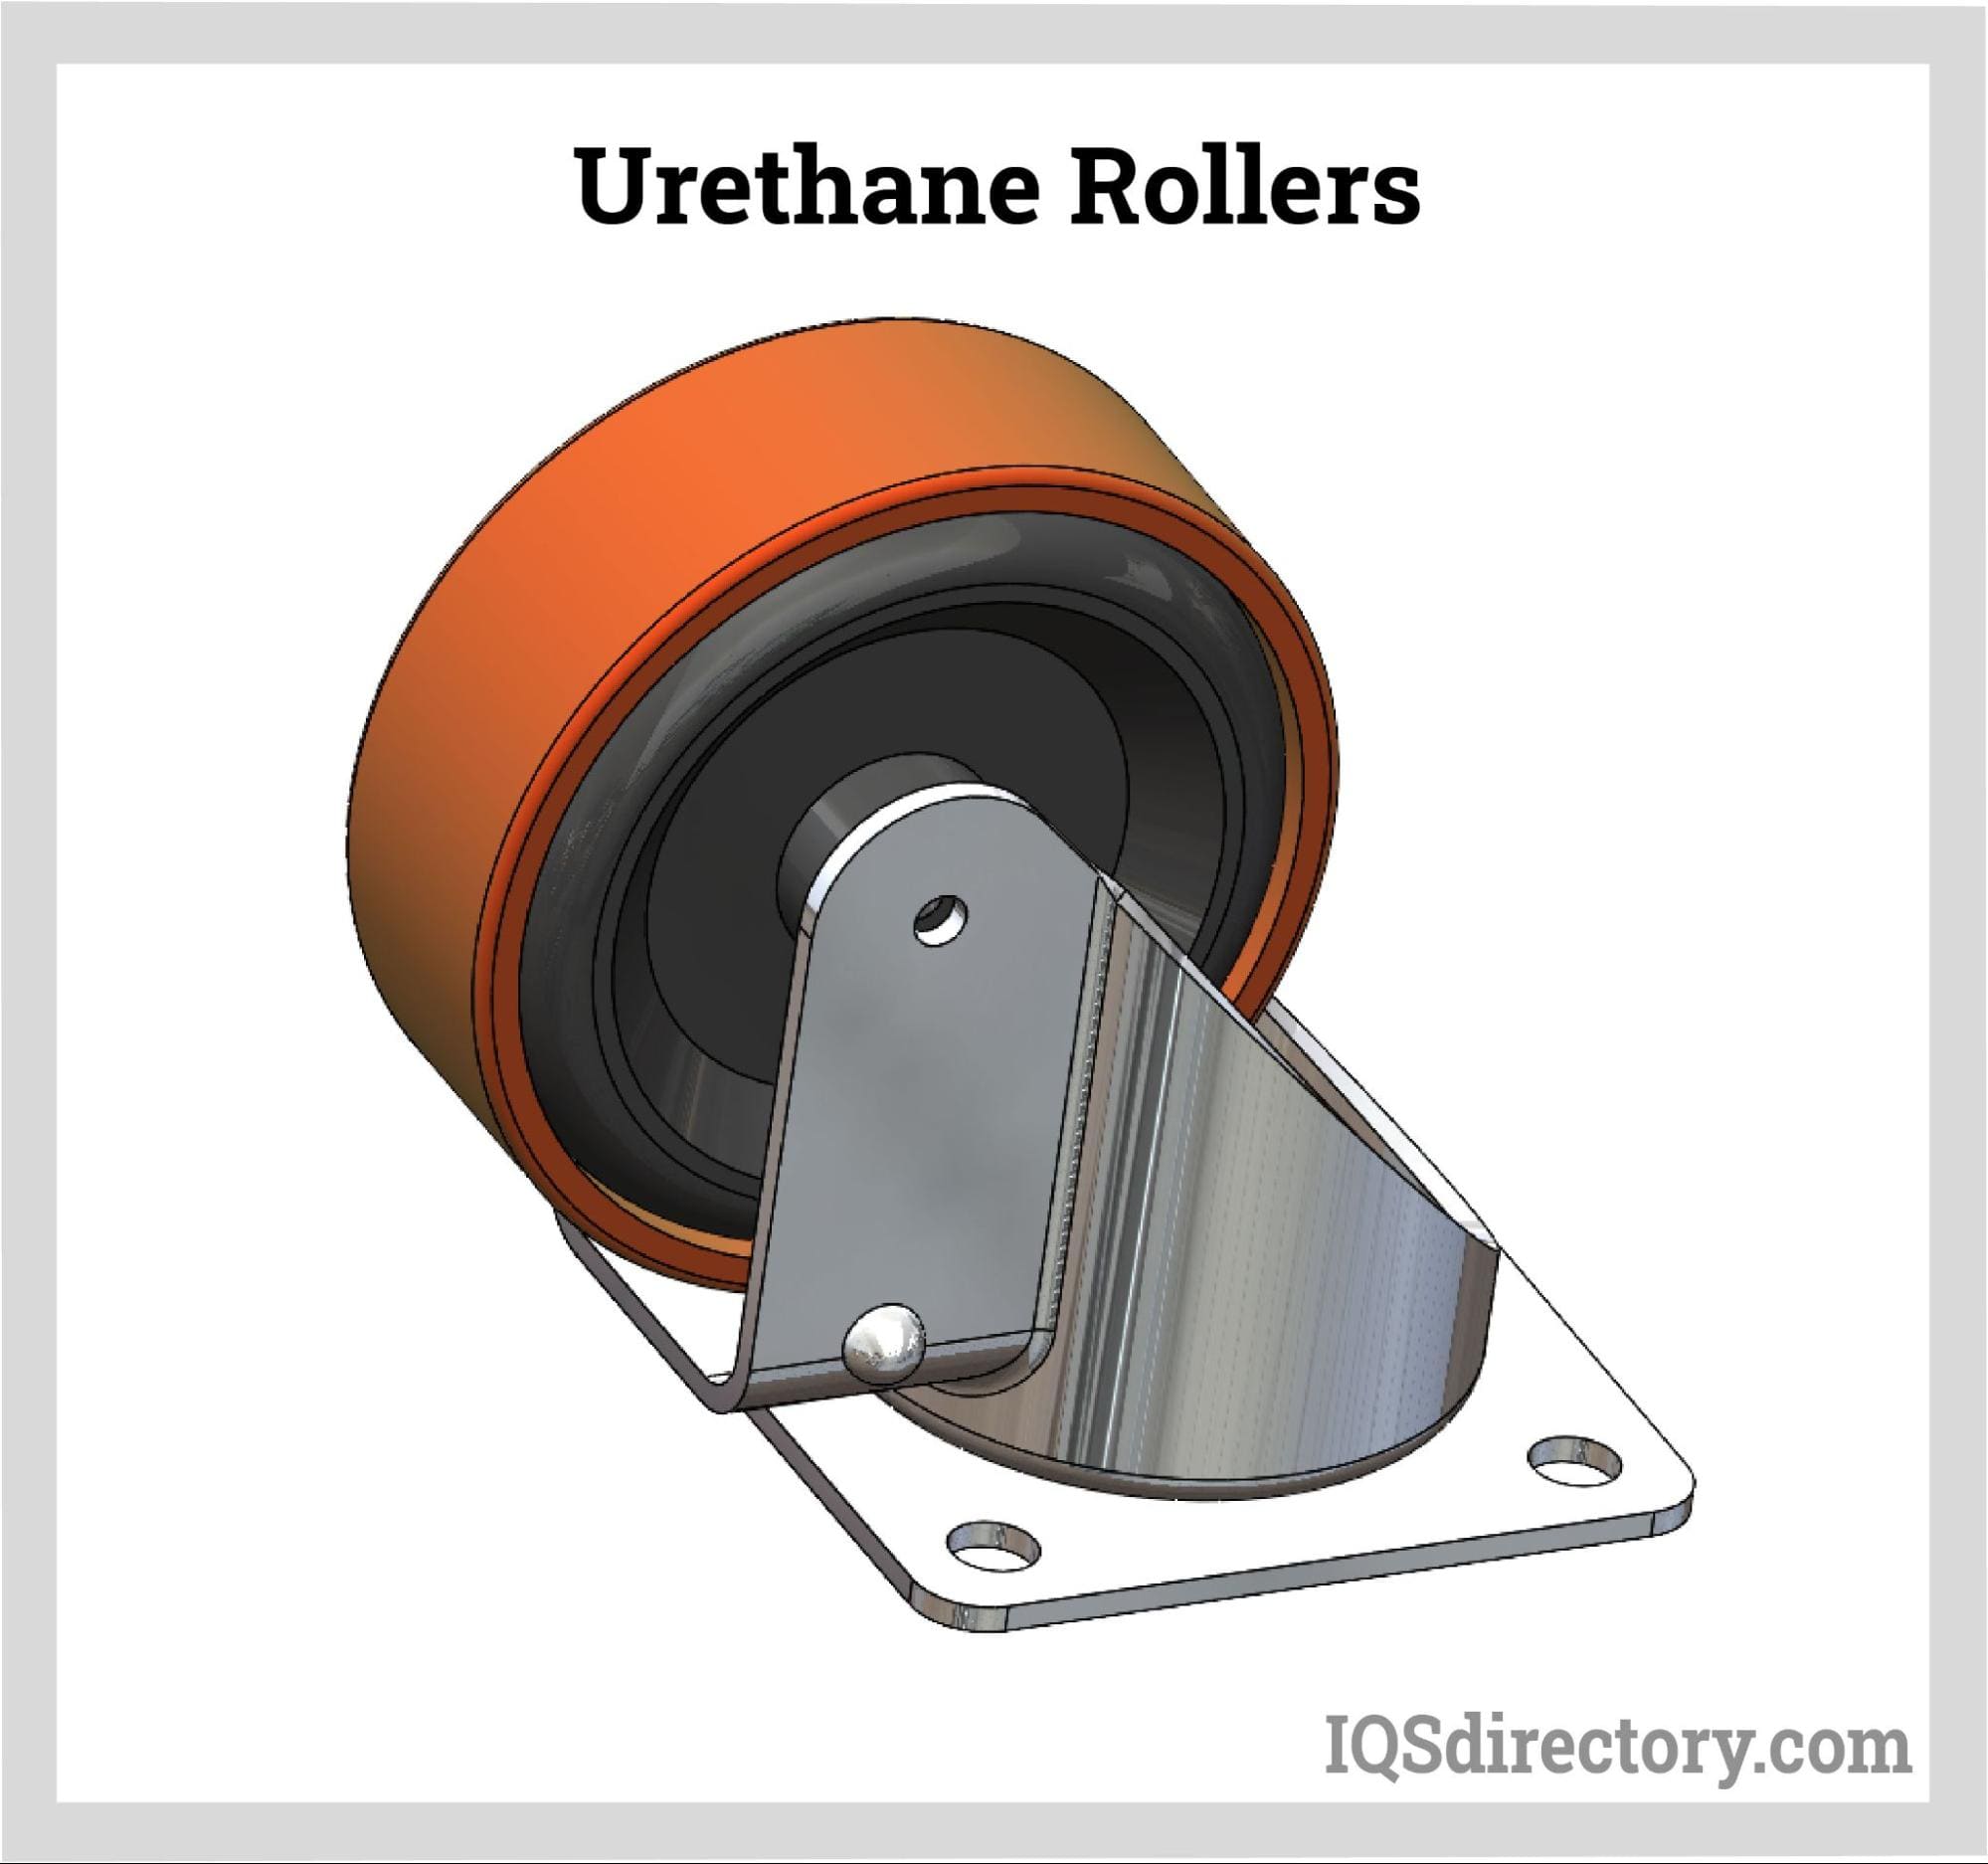 Urethane Rollers